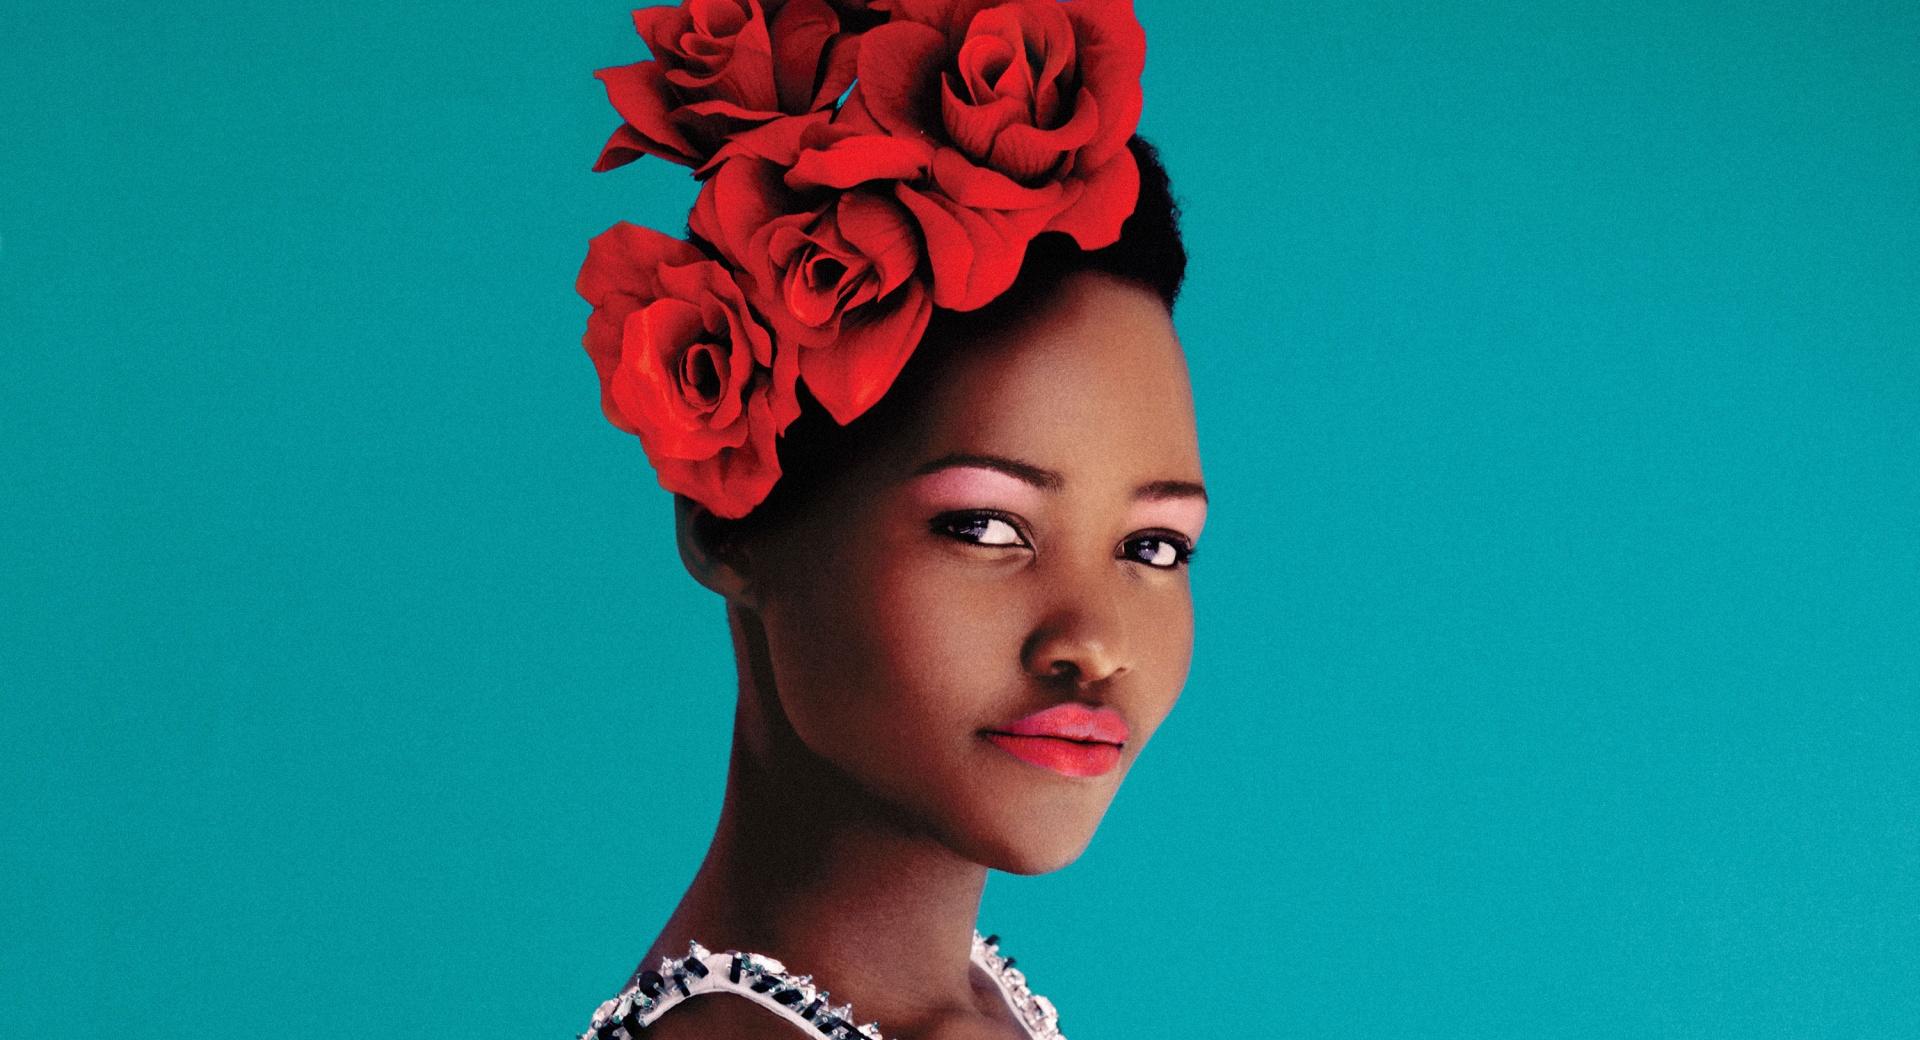 Lupita Nyongo Portrait at 1280 x 960 size wallpapers HD quality